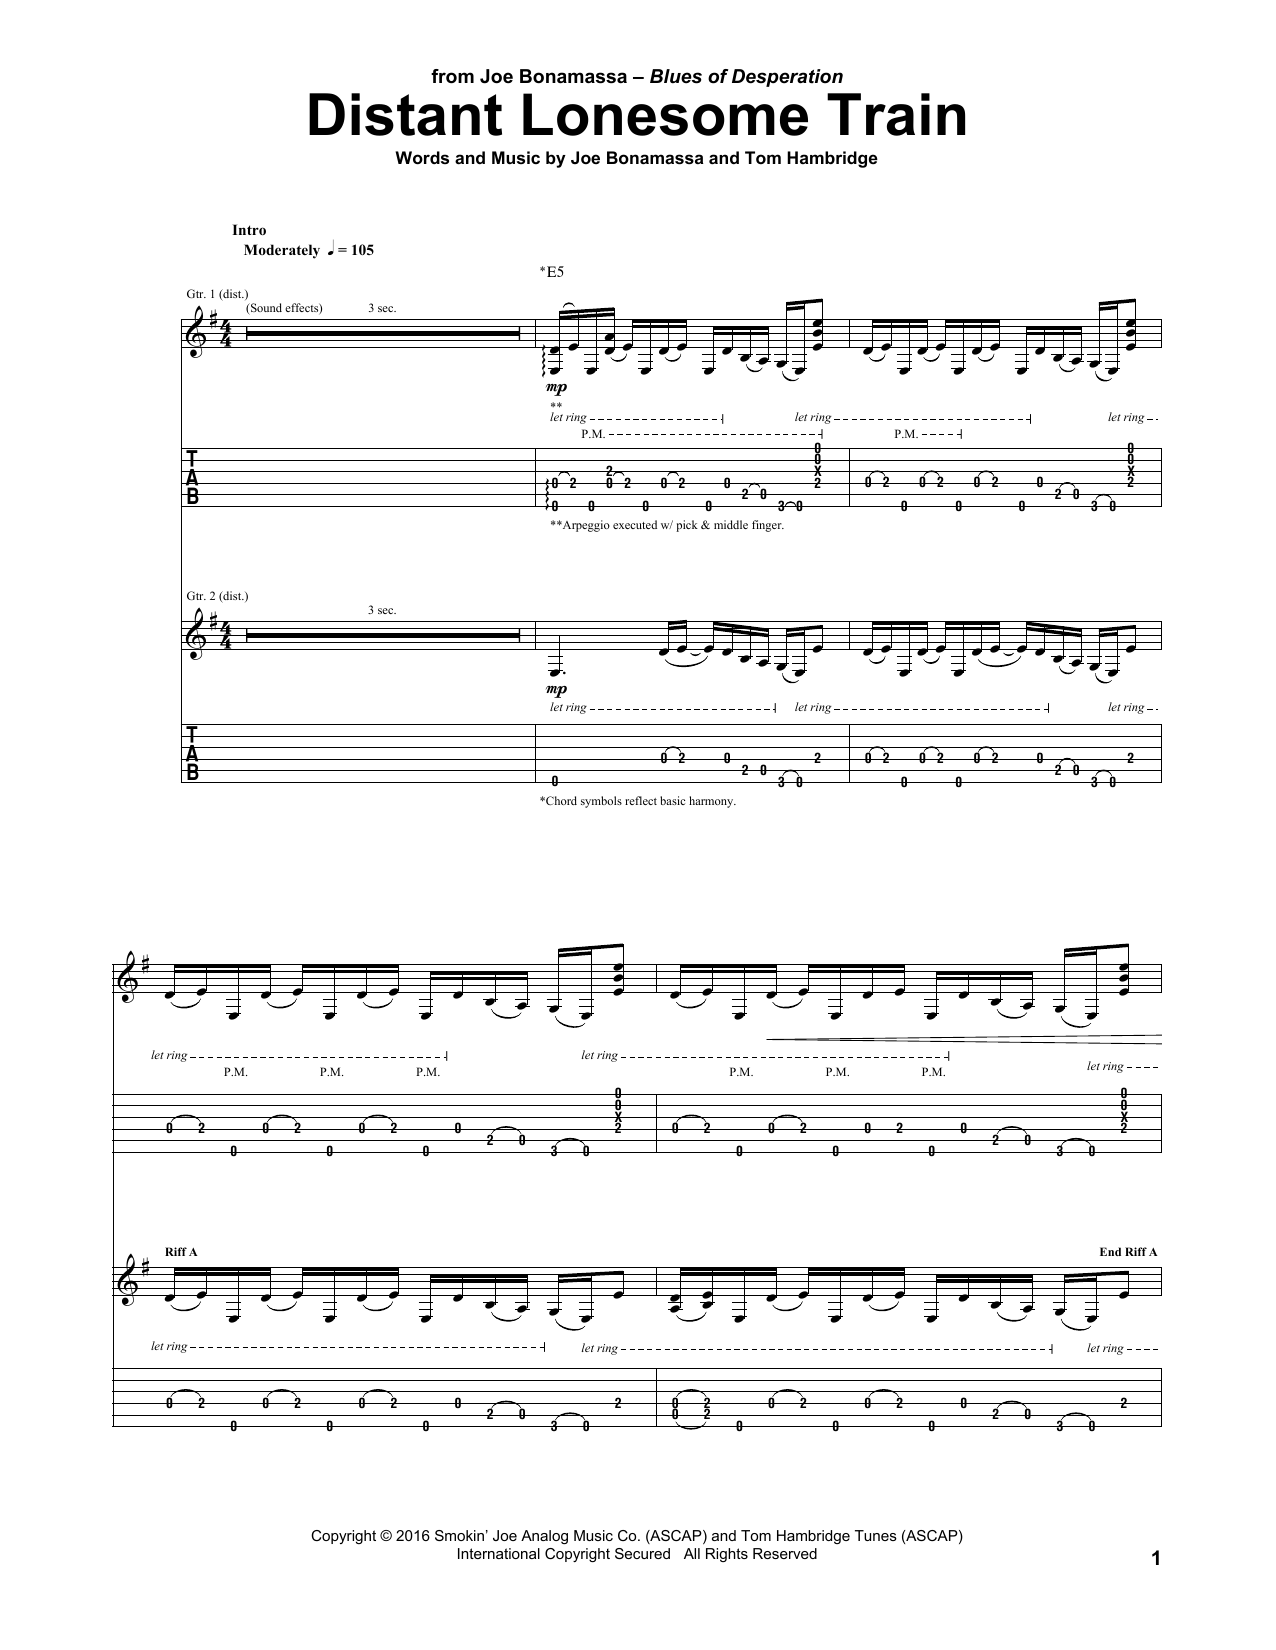 Joe Bonamassa Distant Lonesome Train Sheet Music Notes & Chords for Guitar Tab - Download or Print PDF